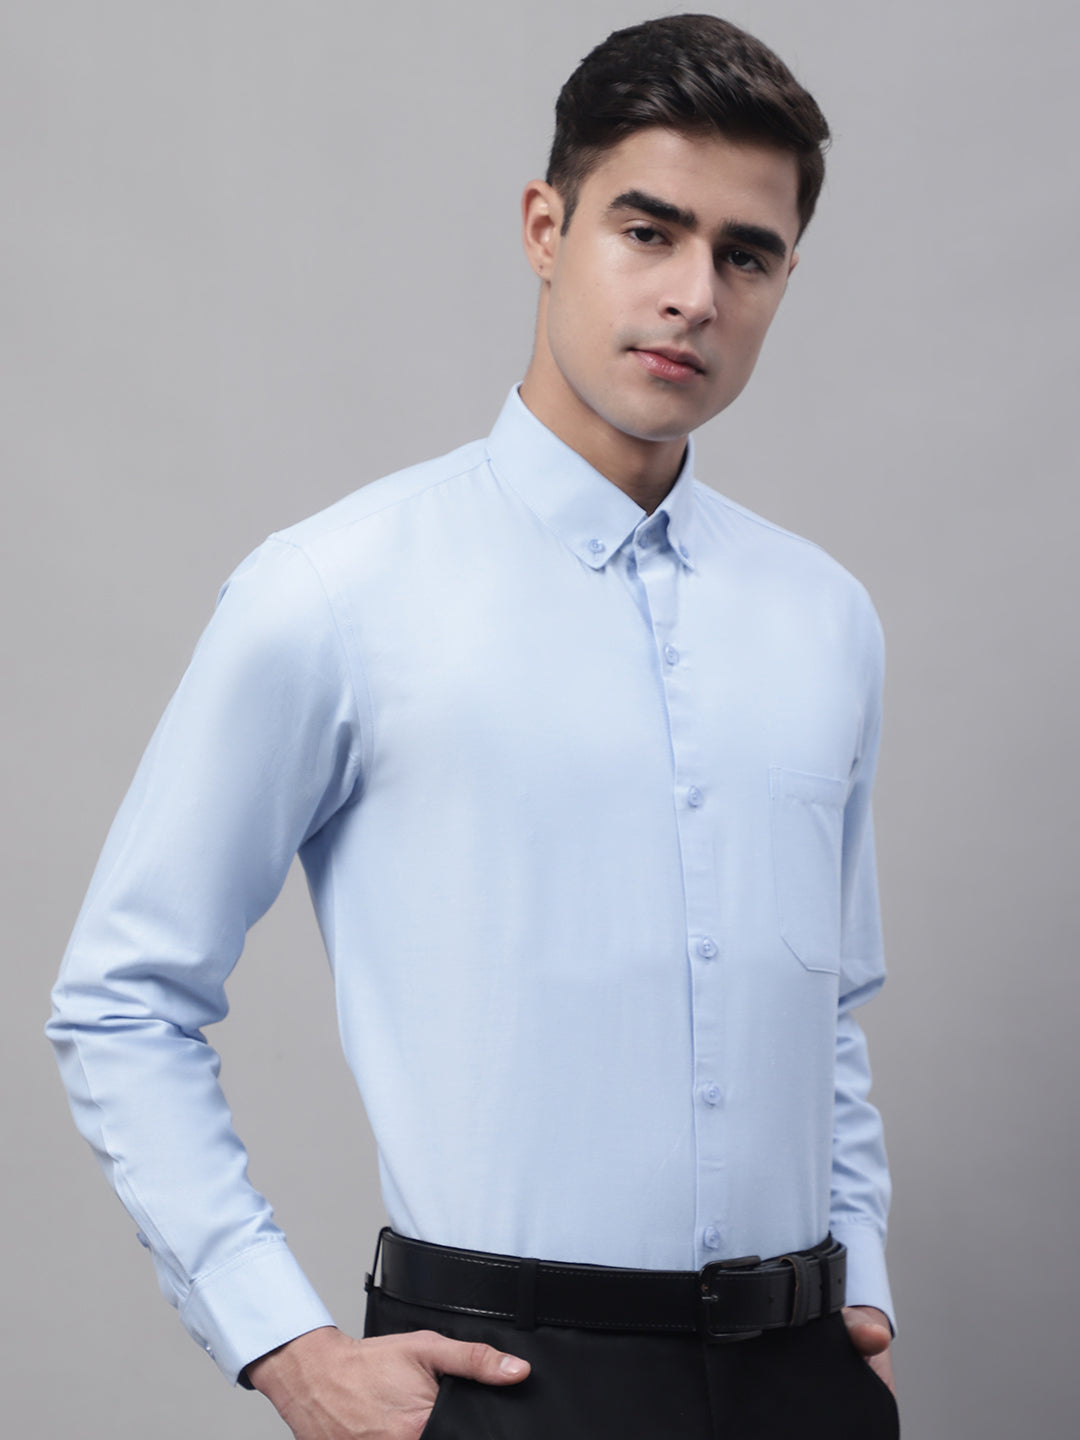 Men's Sky Blue Cotton Solid Formal Shirt